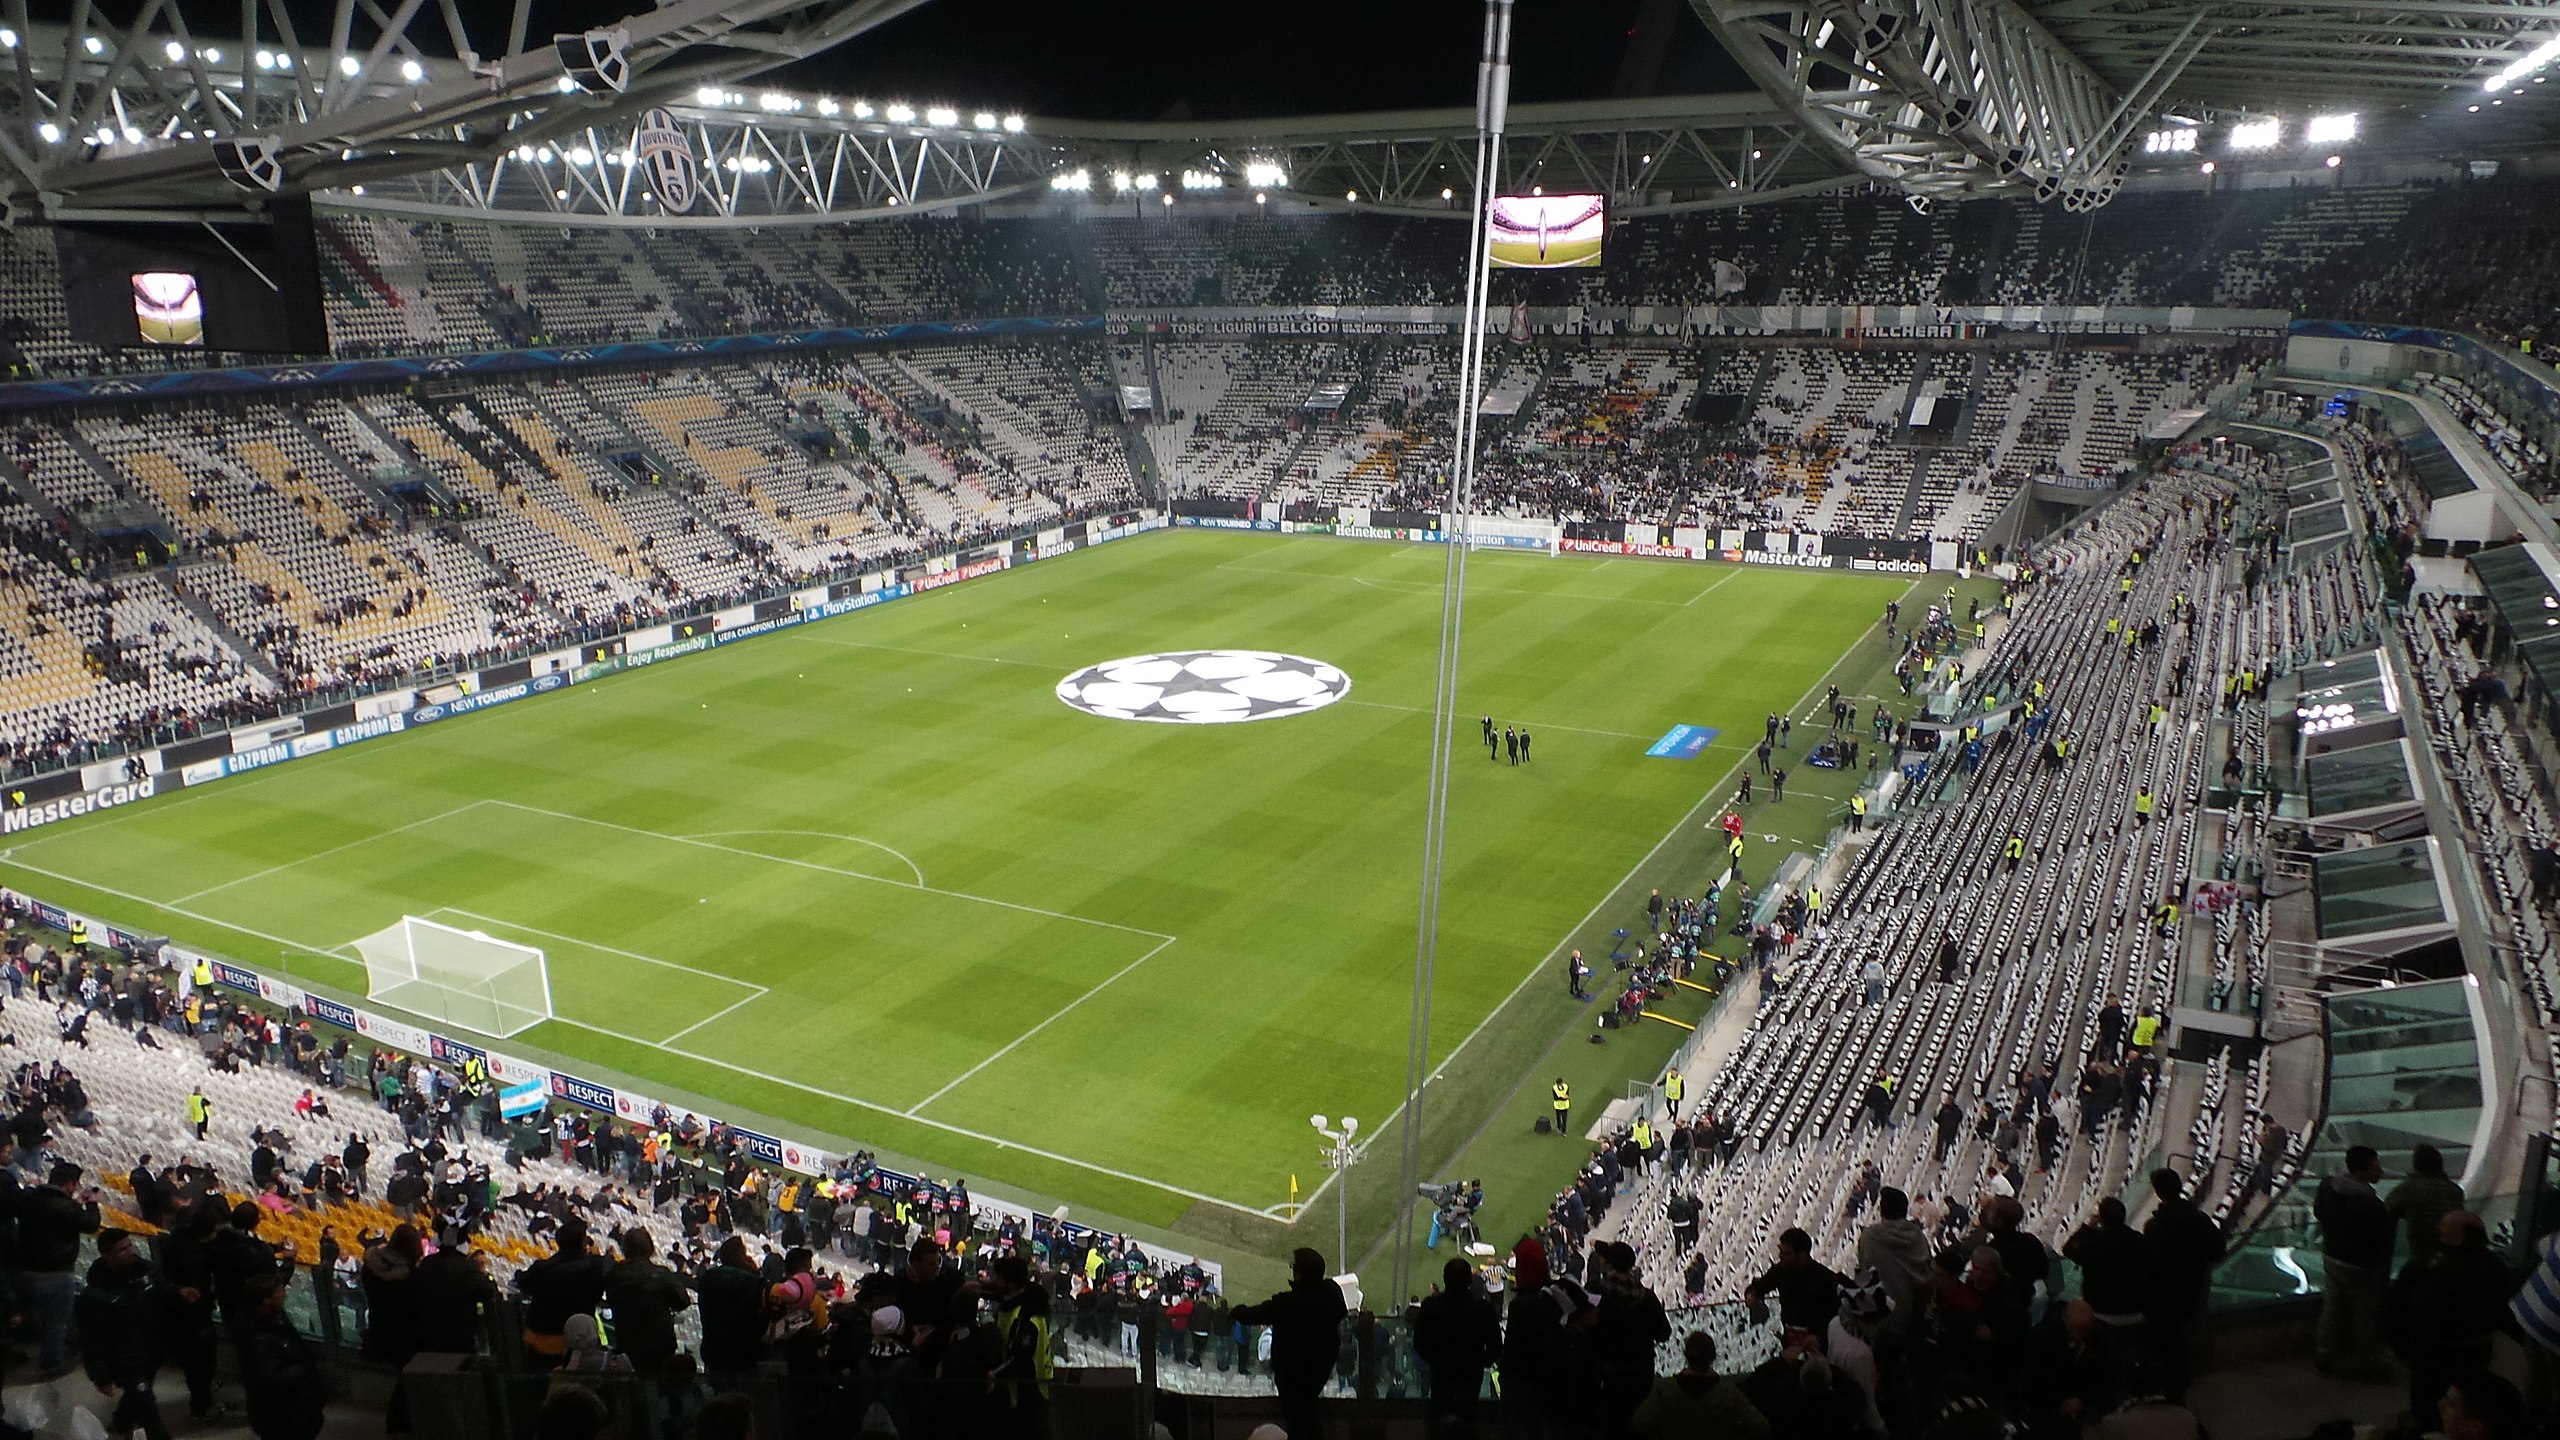 File:Juventus v Real Madrid, Champions League, Stadium, Turin, 2013.jpg - Wikimedia Commons